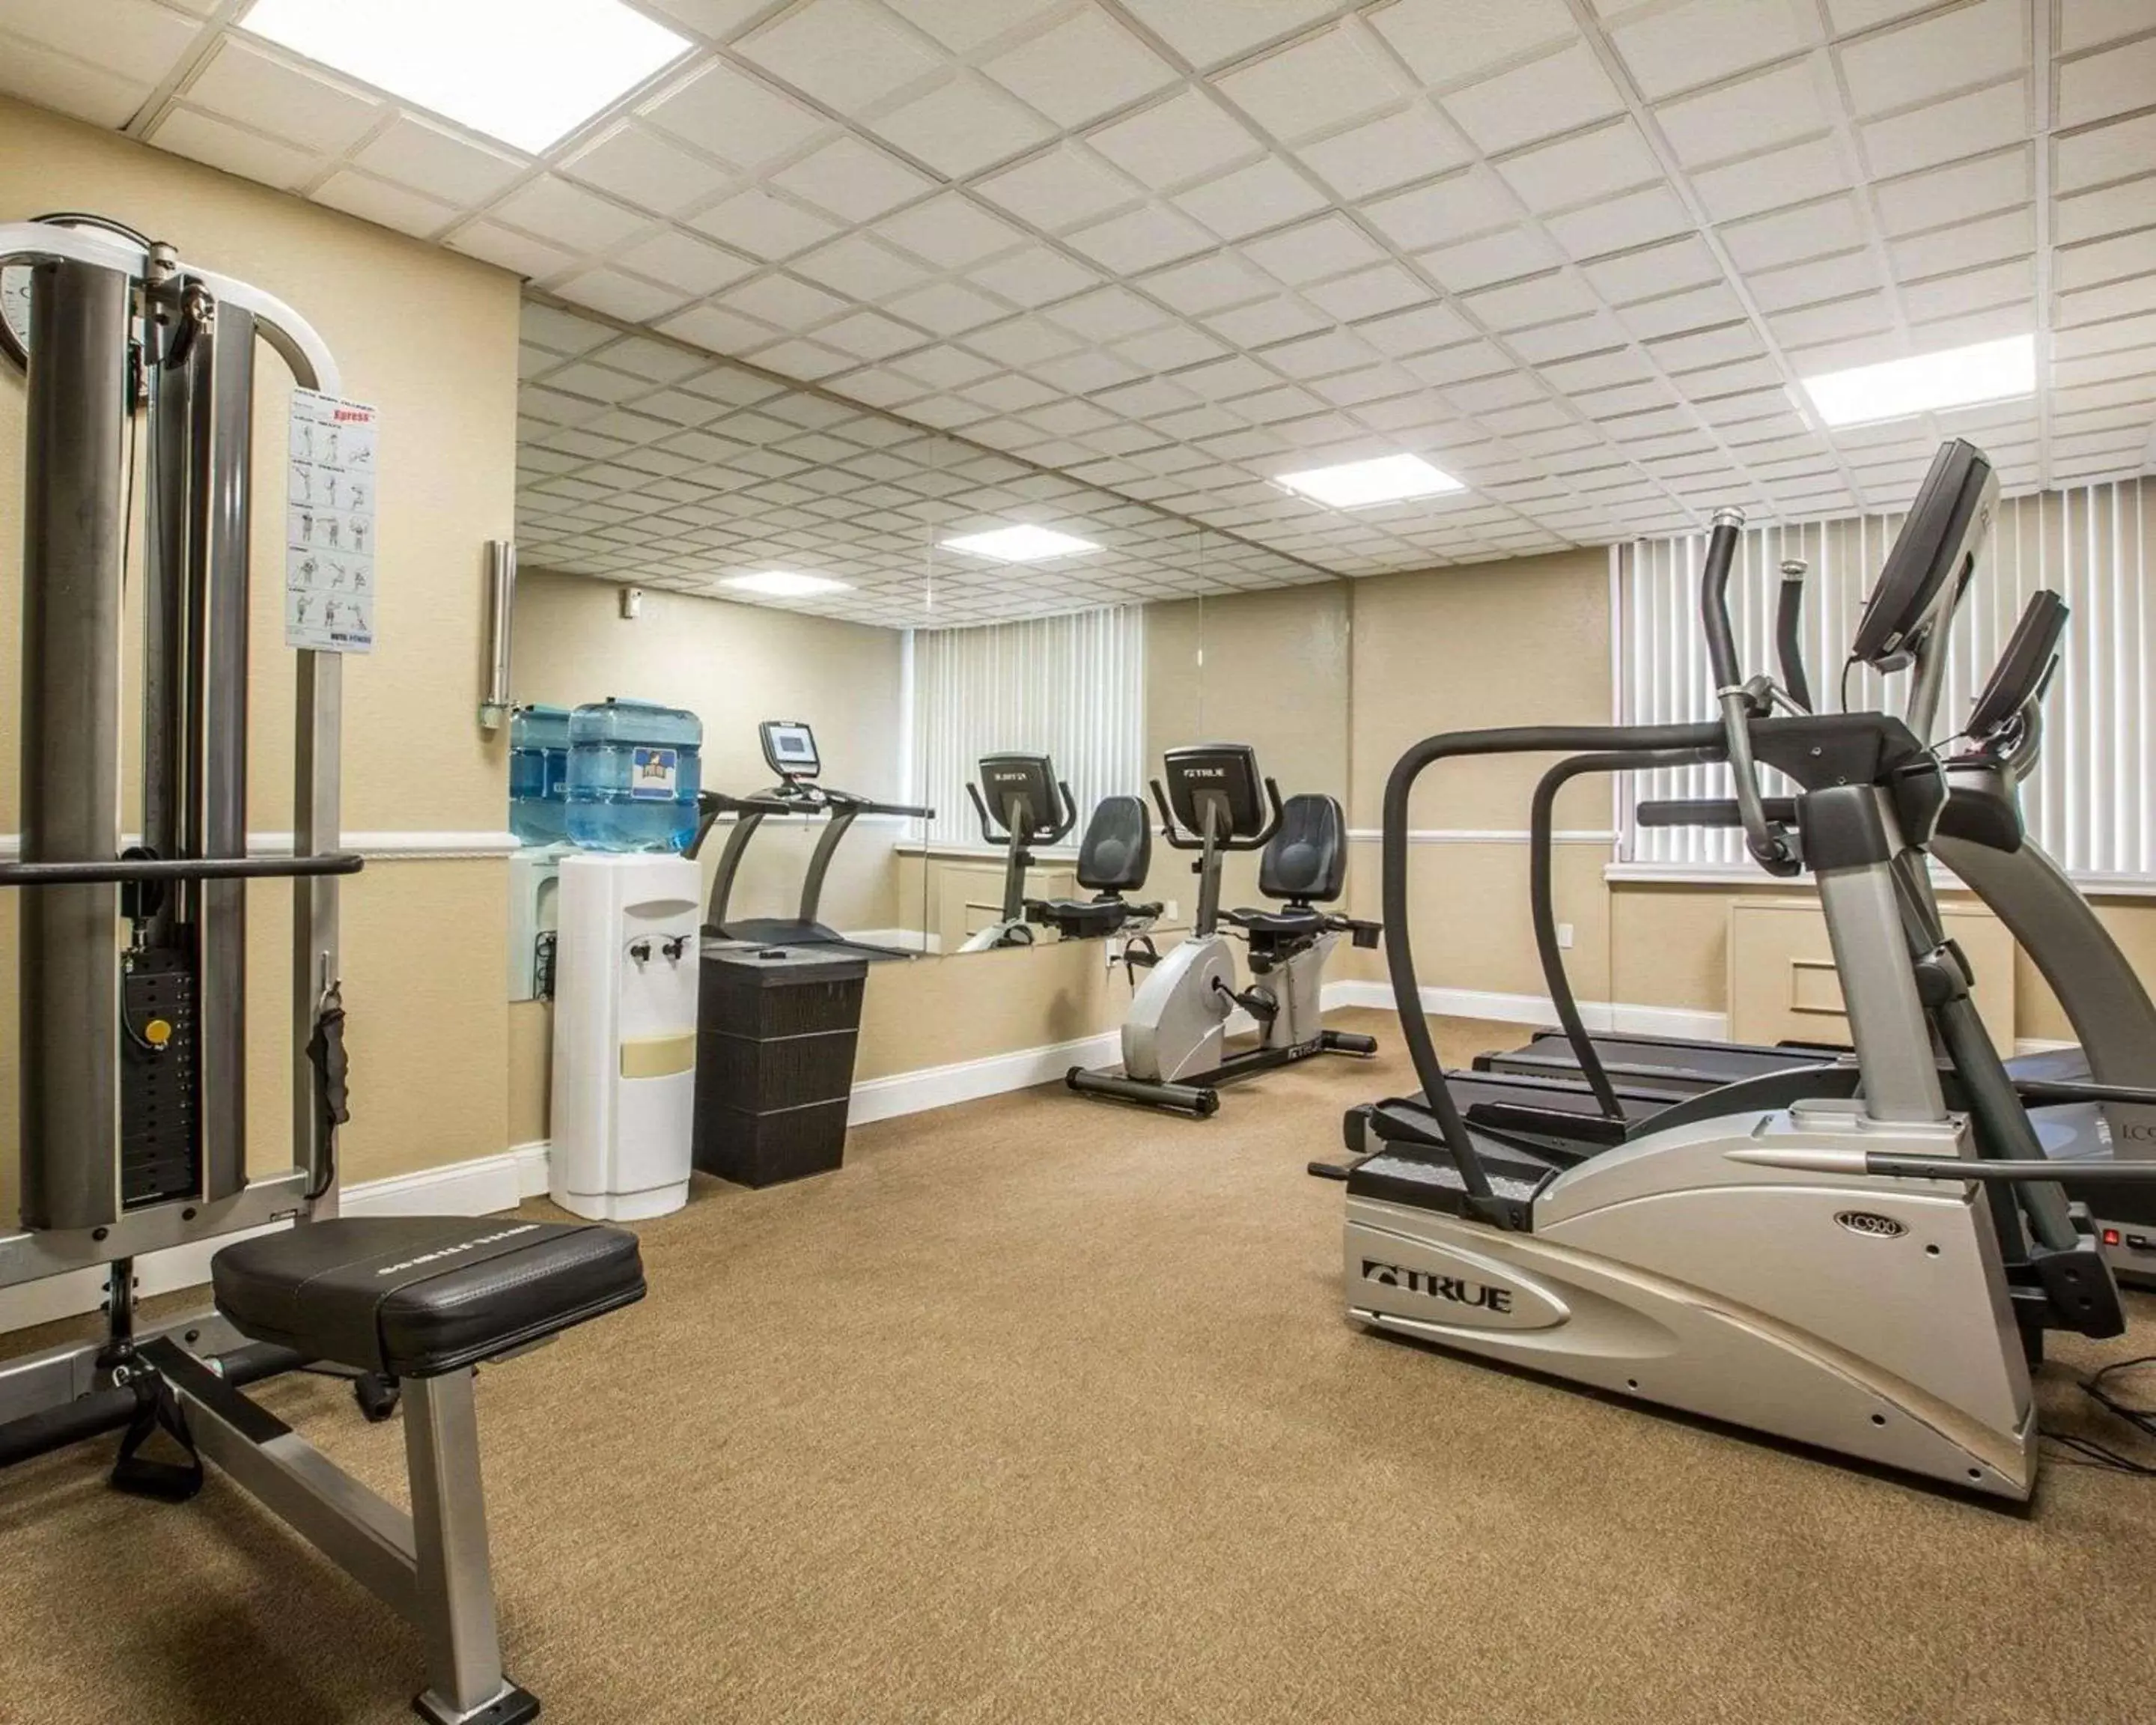 Fitness centre/facilities, Fitness Center/Facilities in Quality Inn Massena